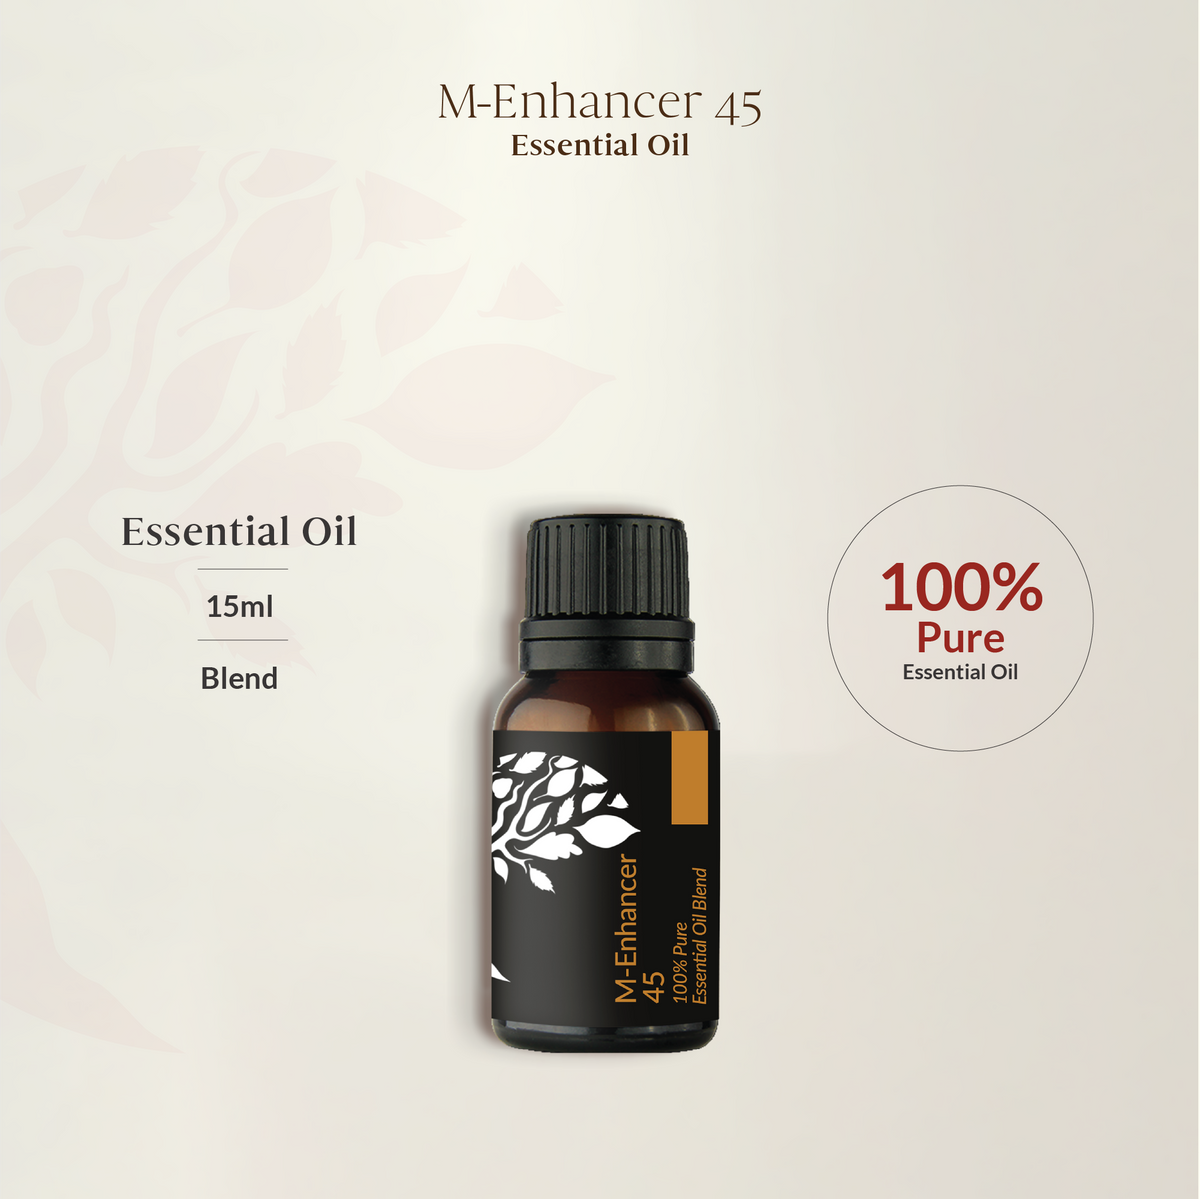 M-Enhancer 45 Essential Oil Blend 15ml